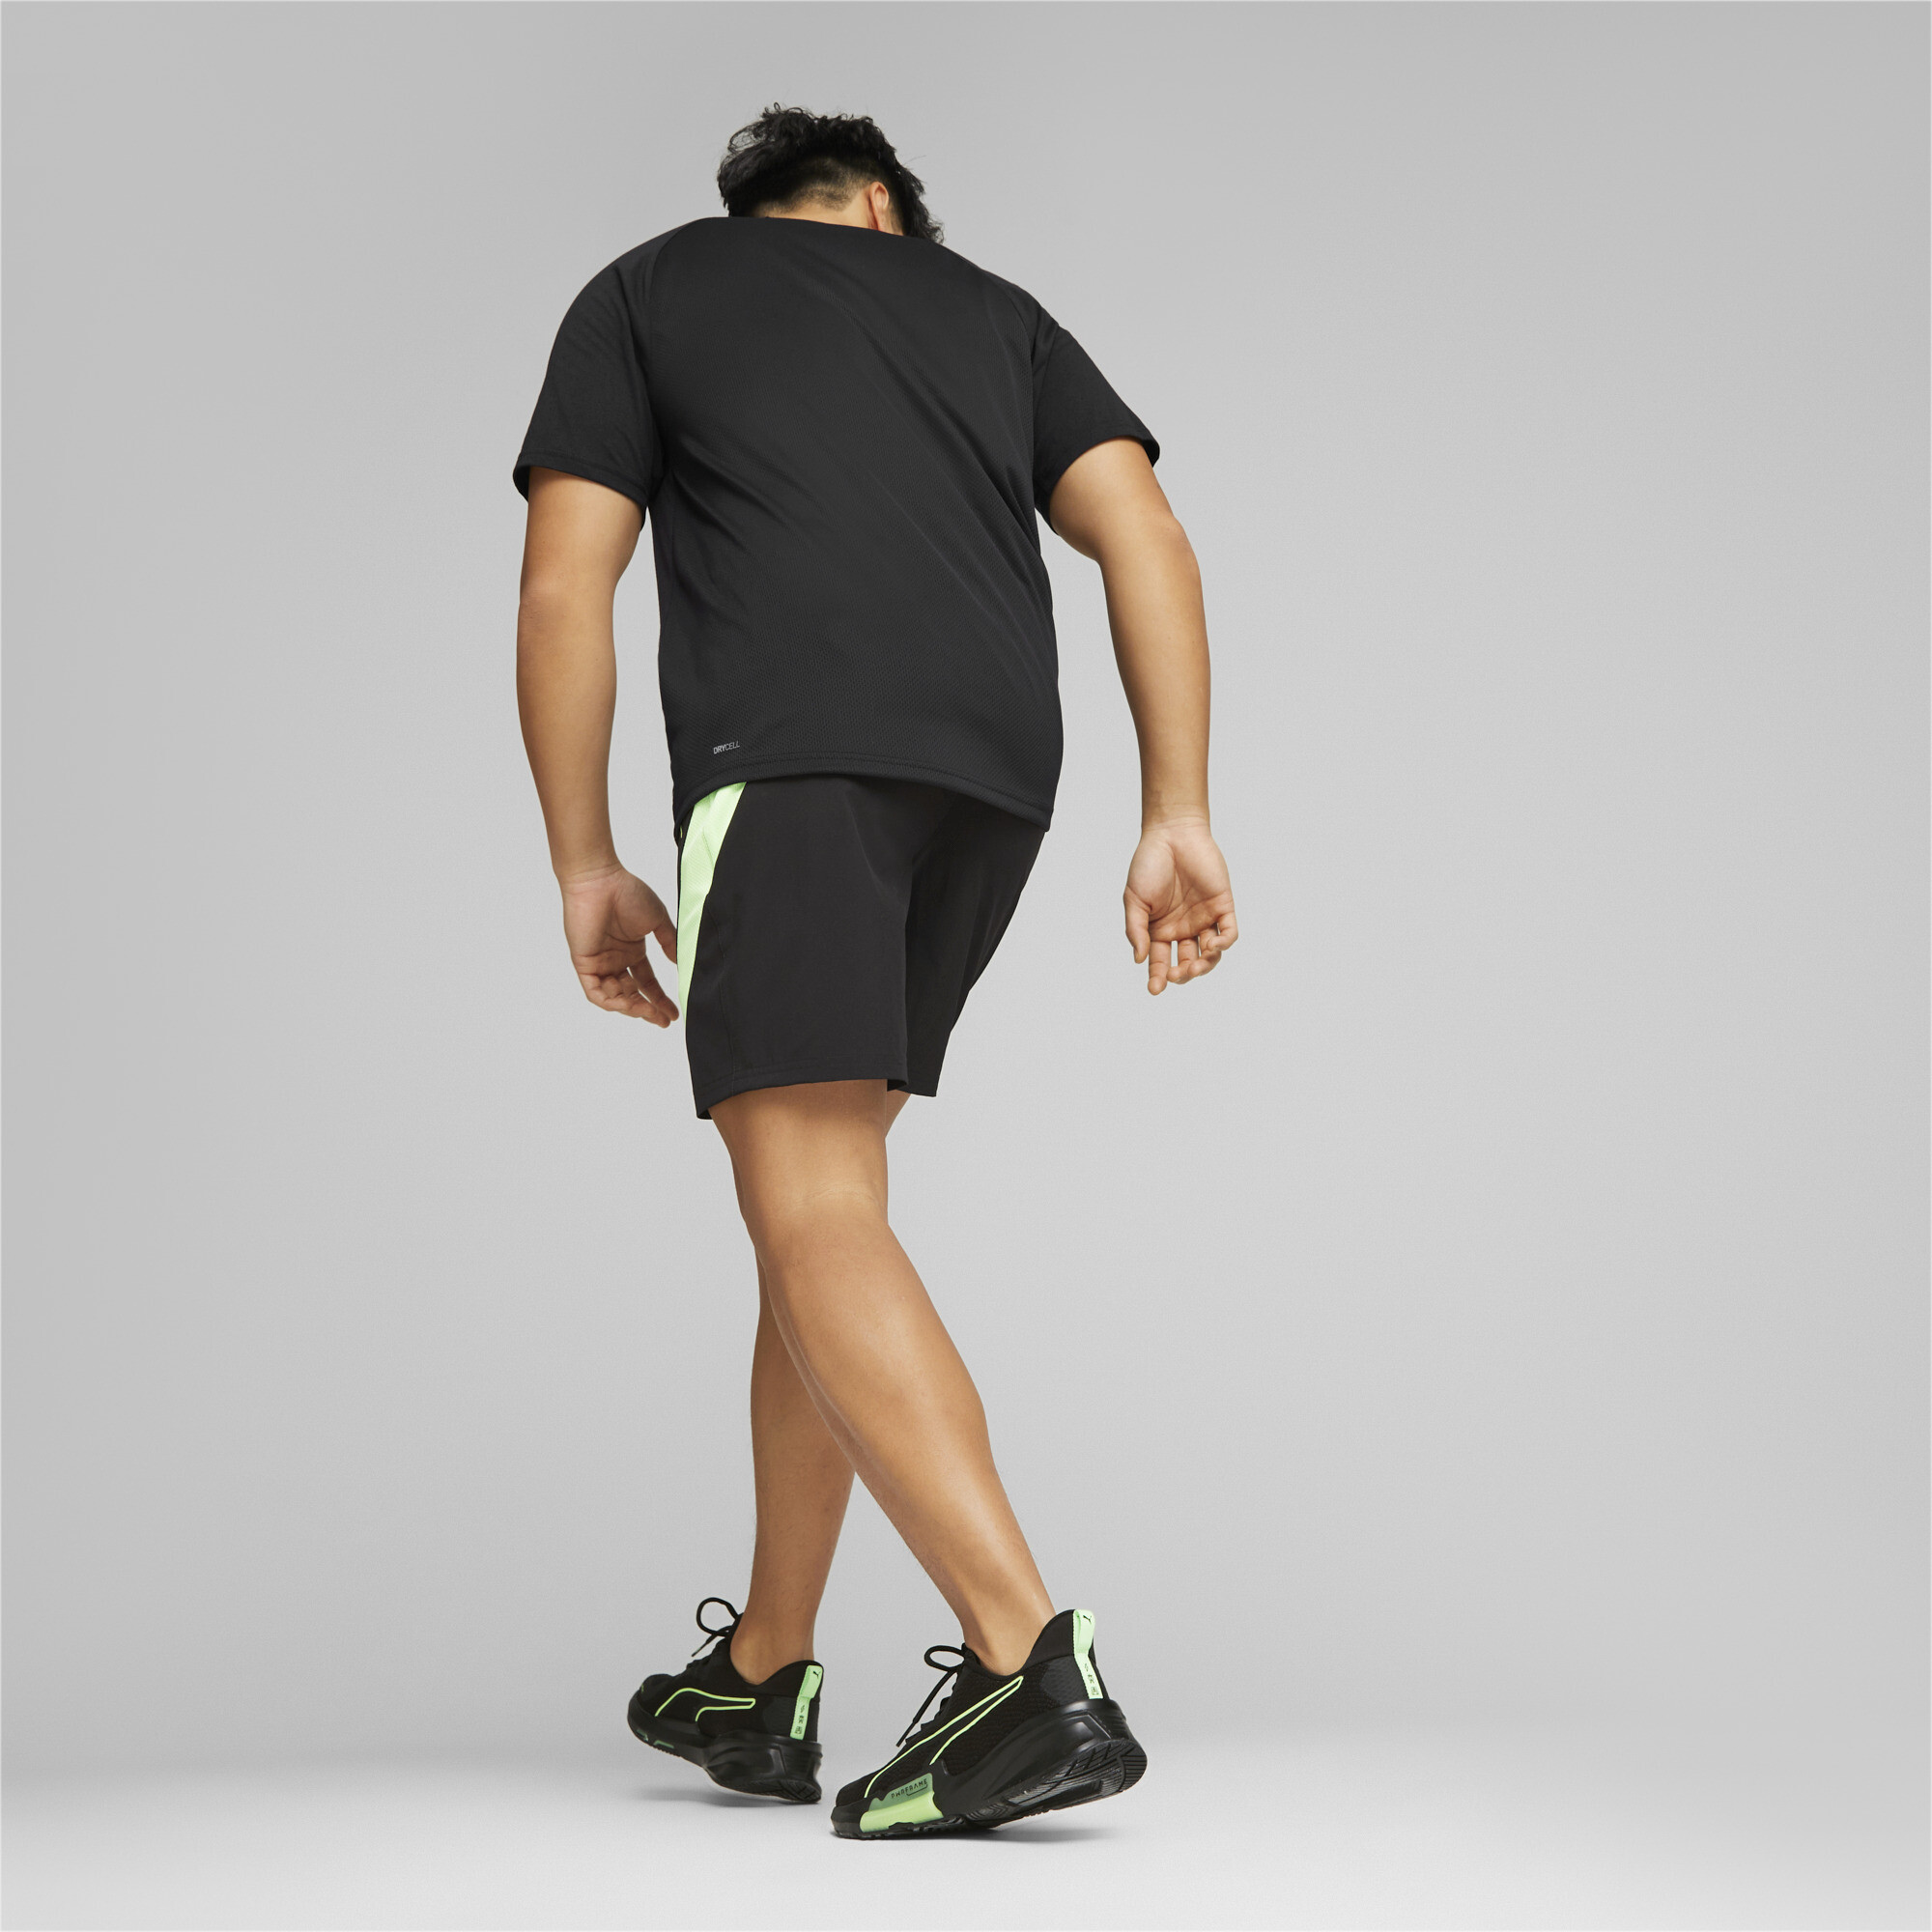 Men's PUMA Fit 7 Stretch Woven Training Shorts Men In Black, Size Medium